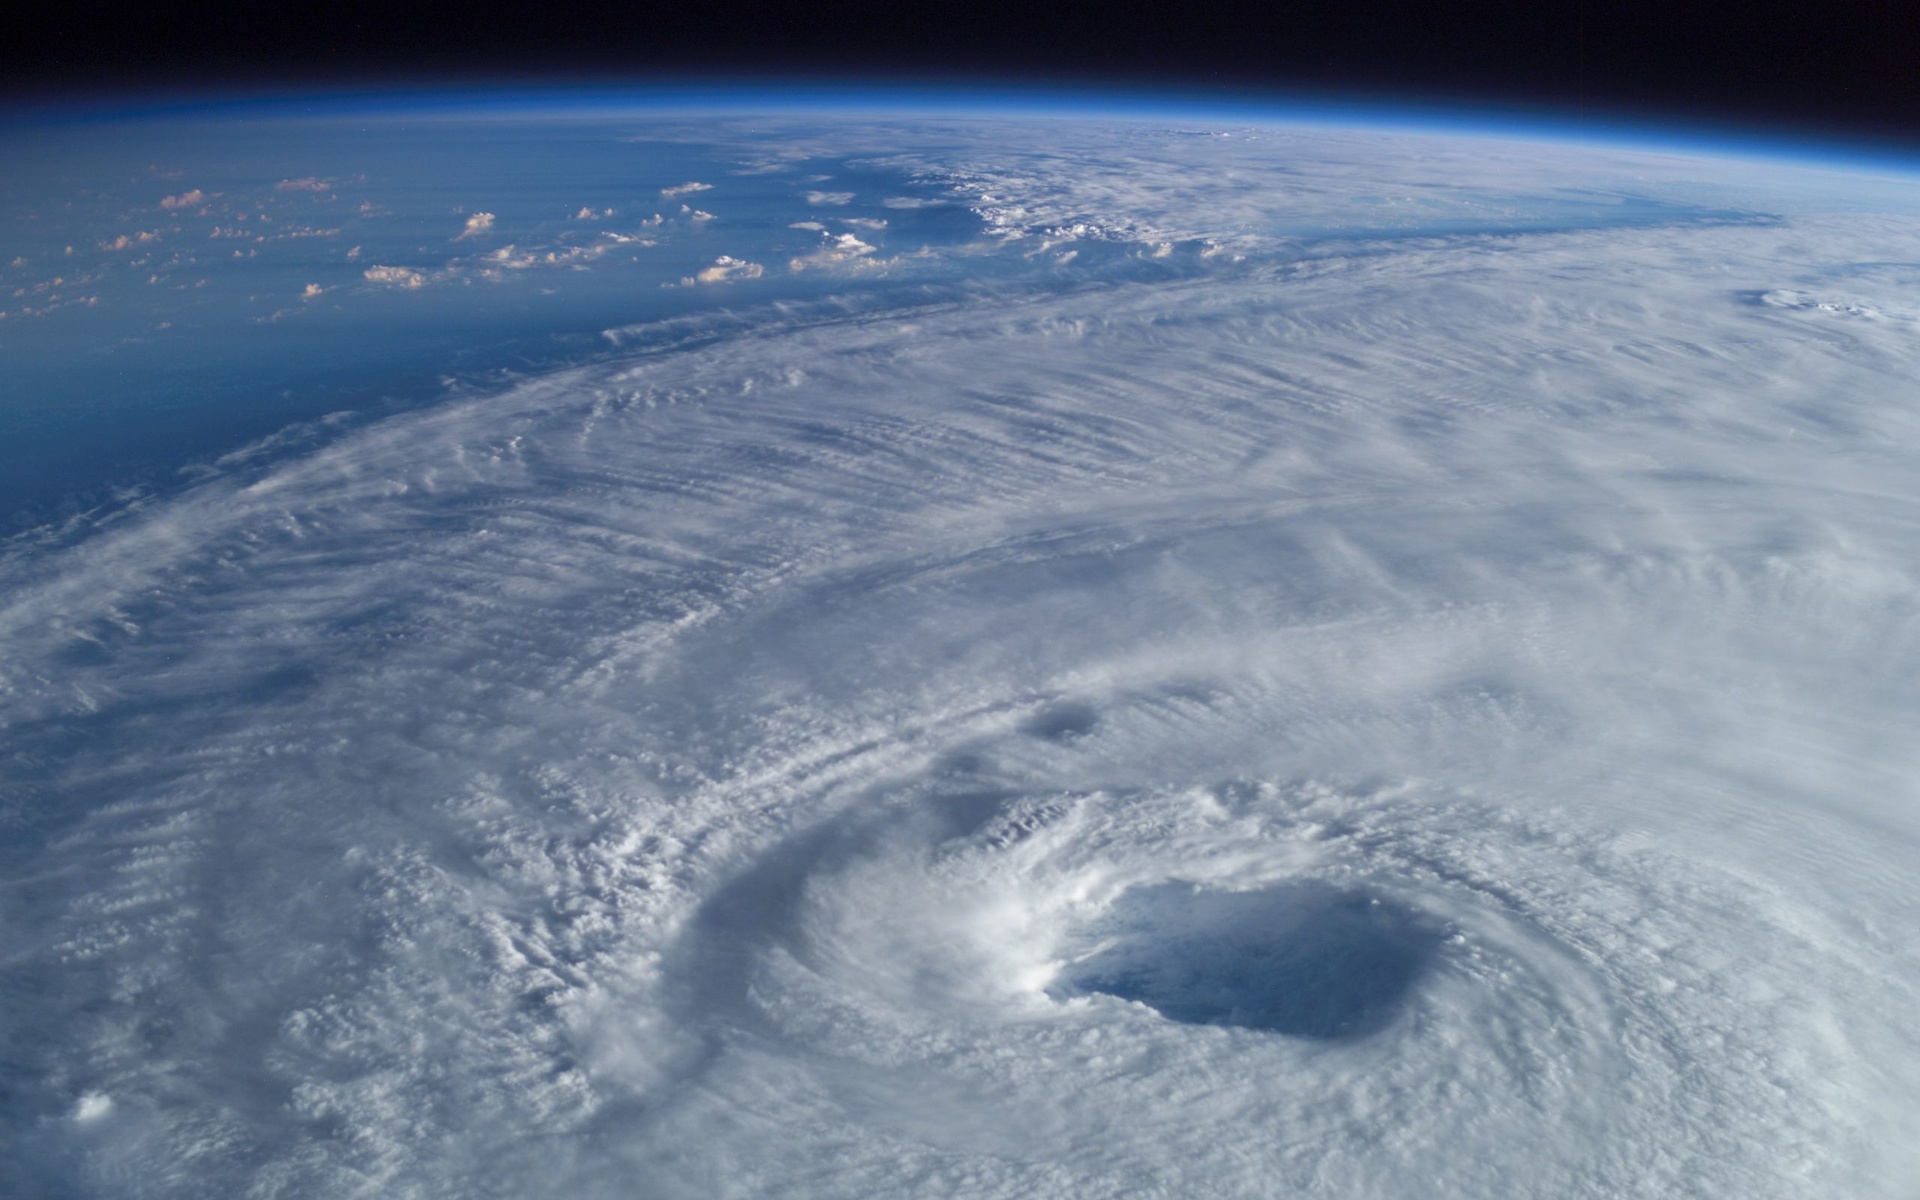 Oeil du cyclone - photo par satellite.jpg